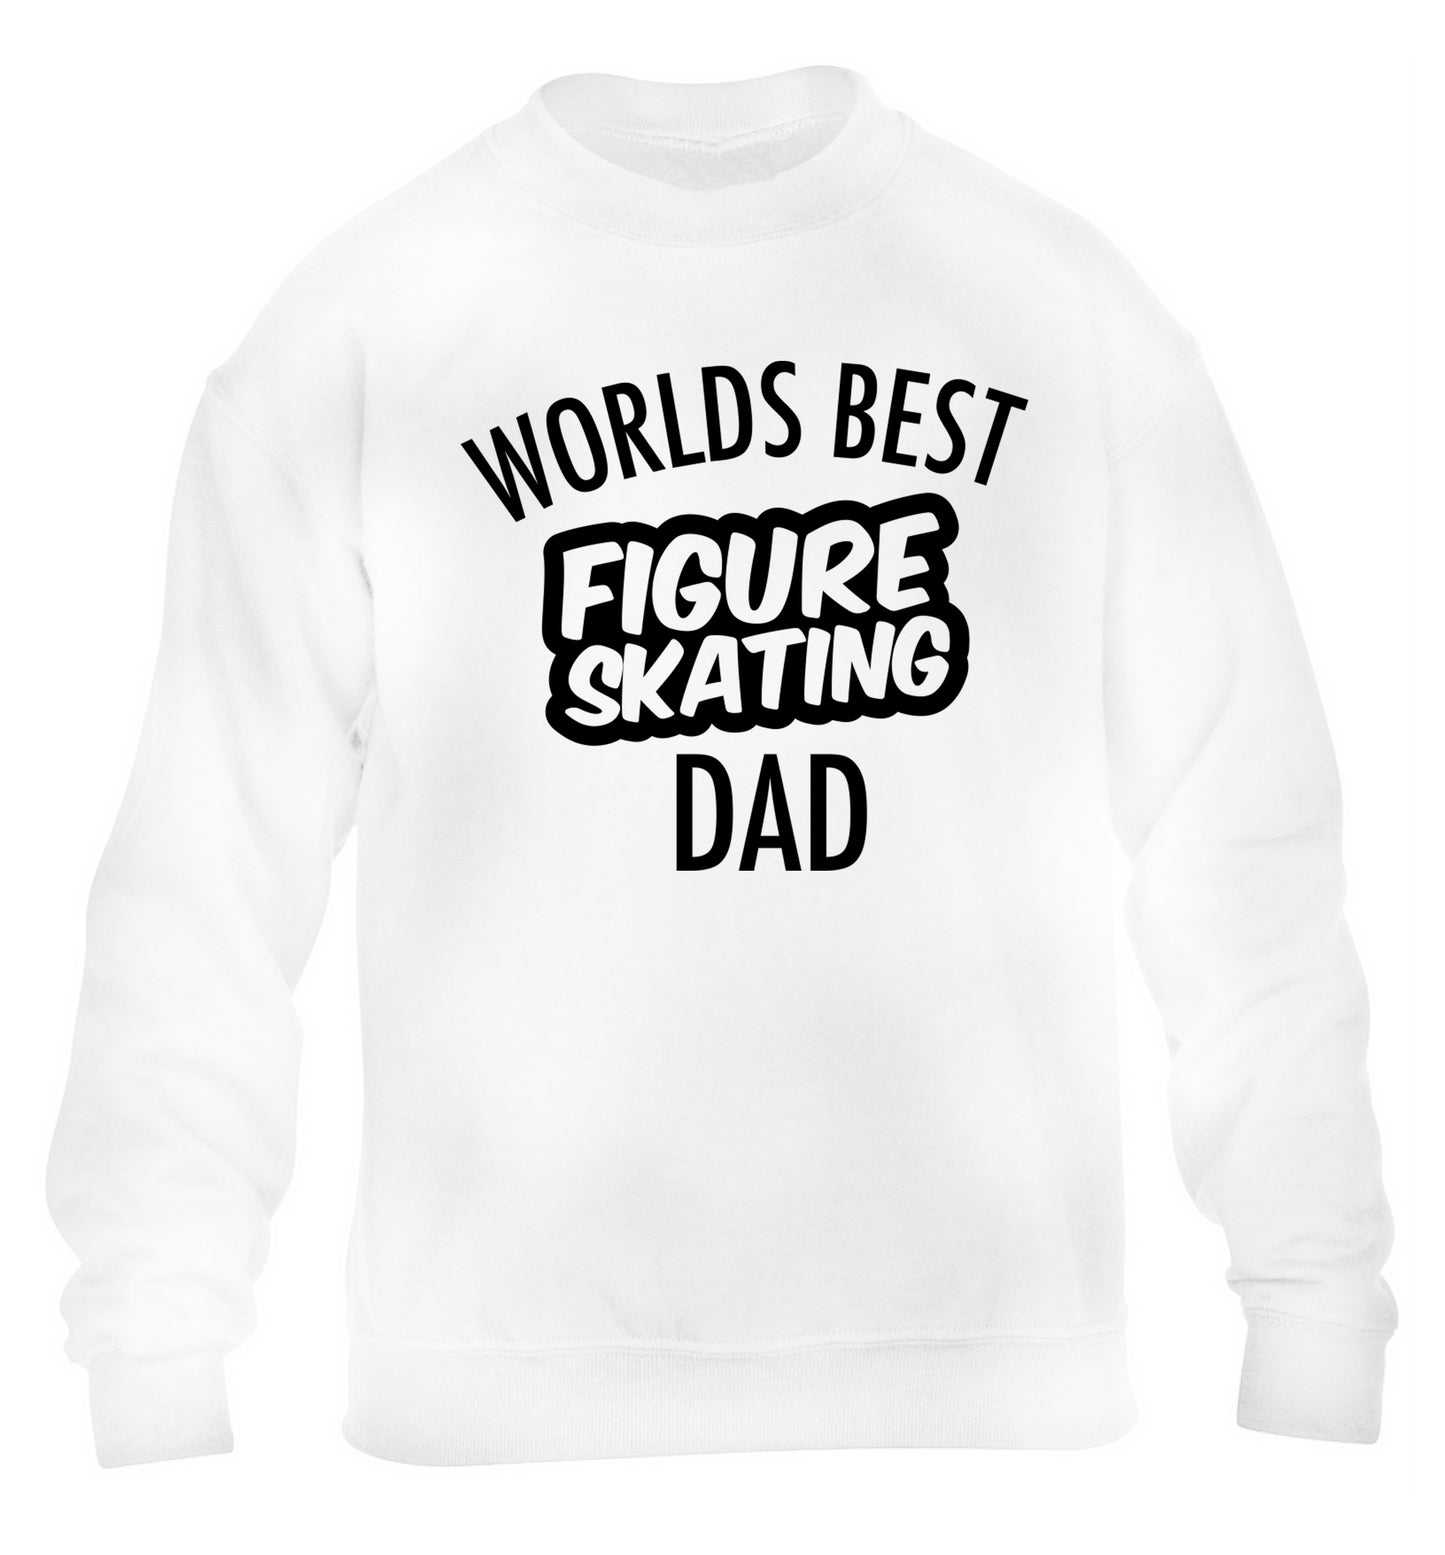 Worlds best figure skating dad children's white sweater 12-14 Years